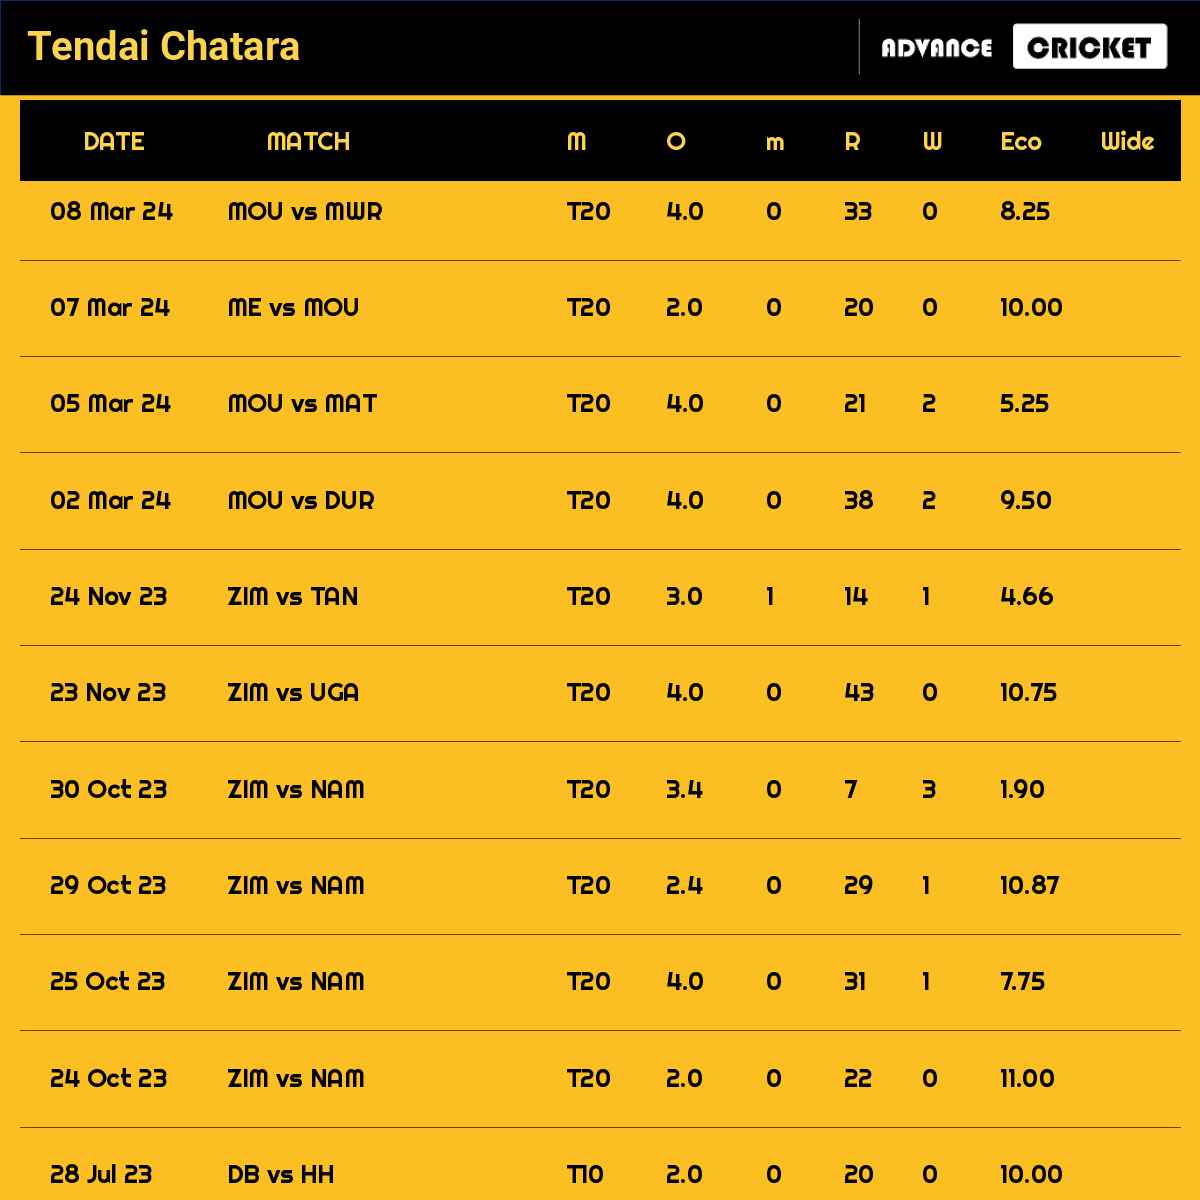 Tendai Chatara recent matches